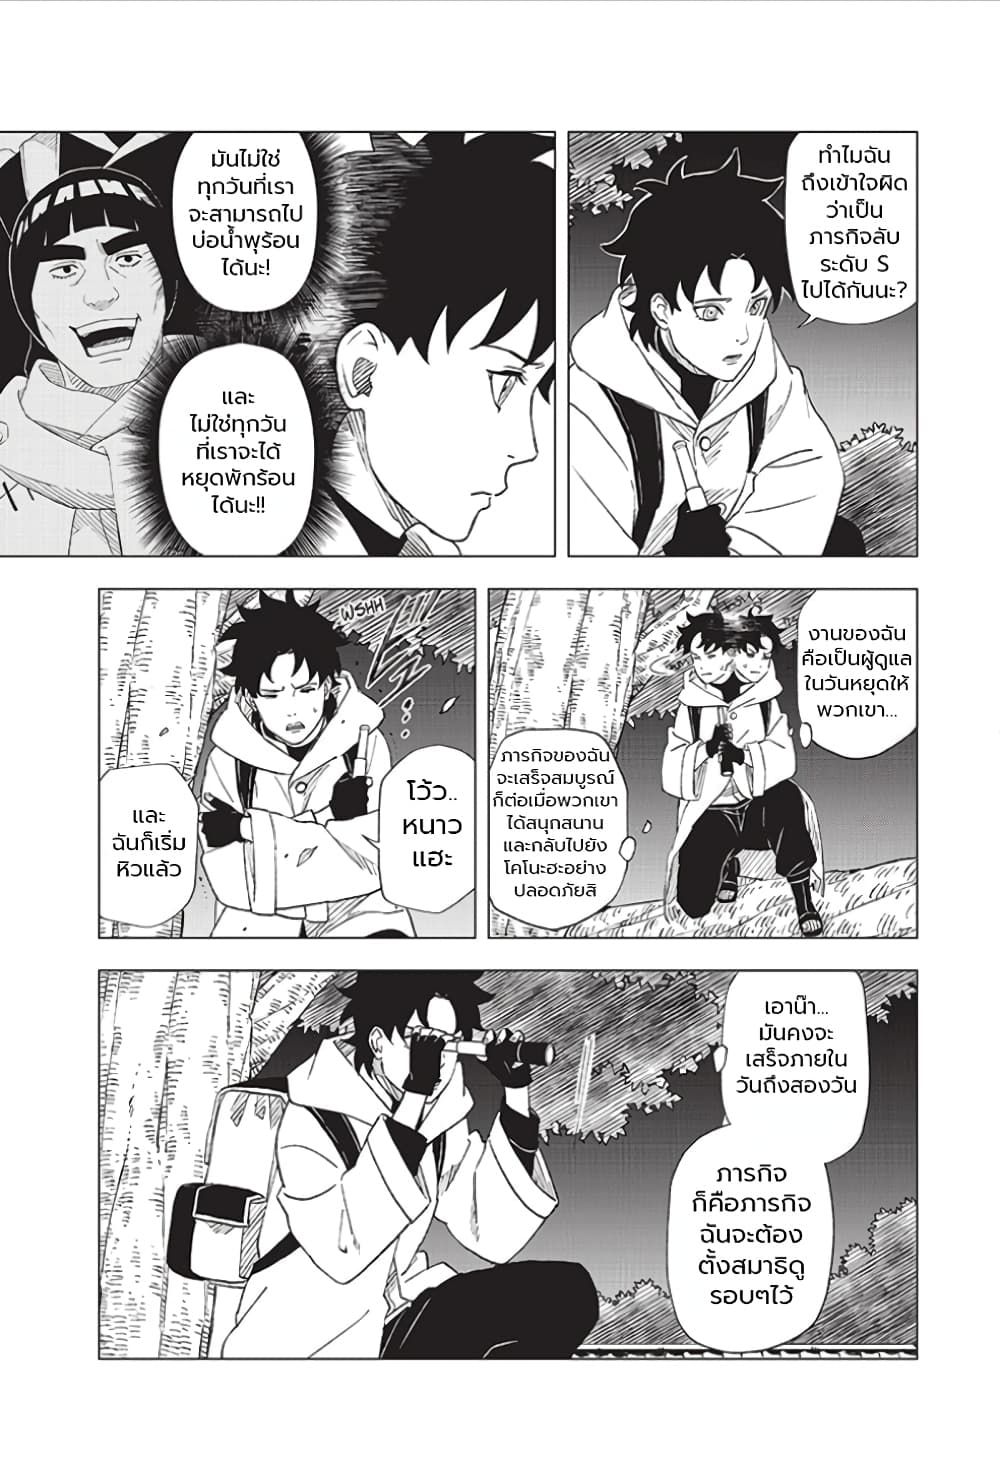 Naruto Konoha’s Story – The Steam Ninja Scrolls The Manga ตอนที่ 4 (3)